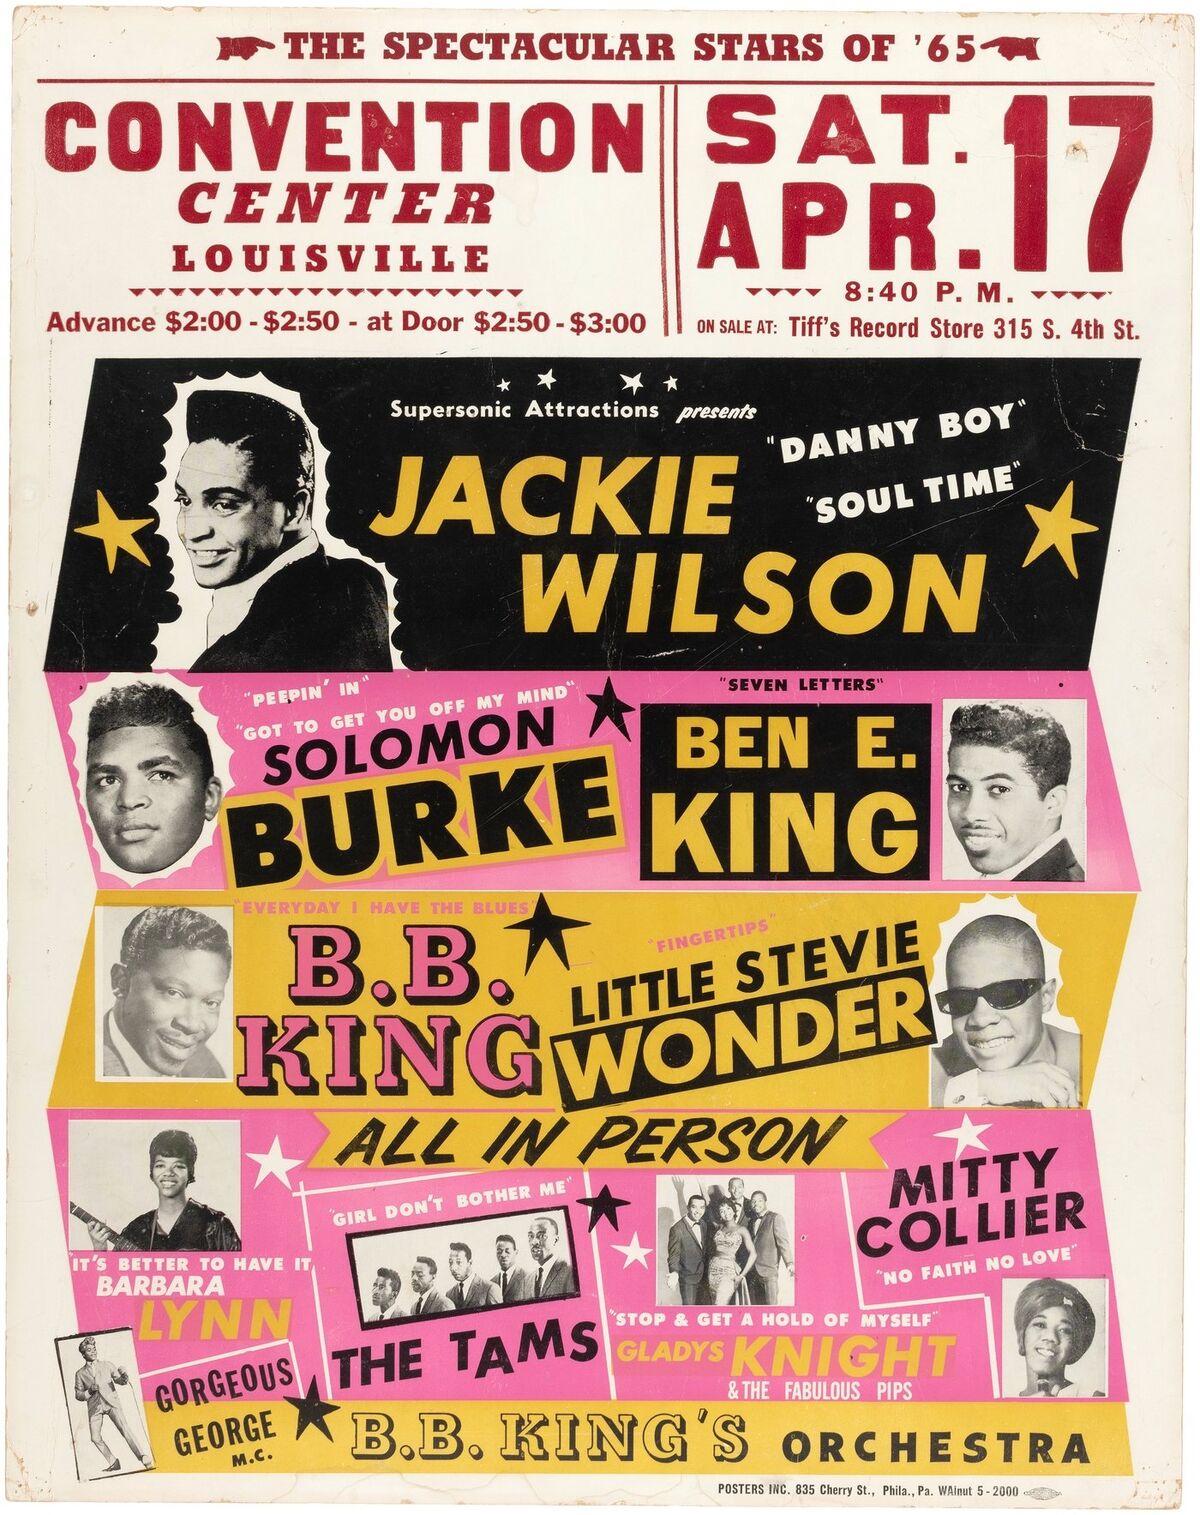 April 17, 1965 Convention Center, Louisville, KY Concerts Wiki Fandom